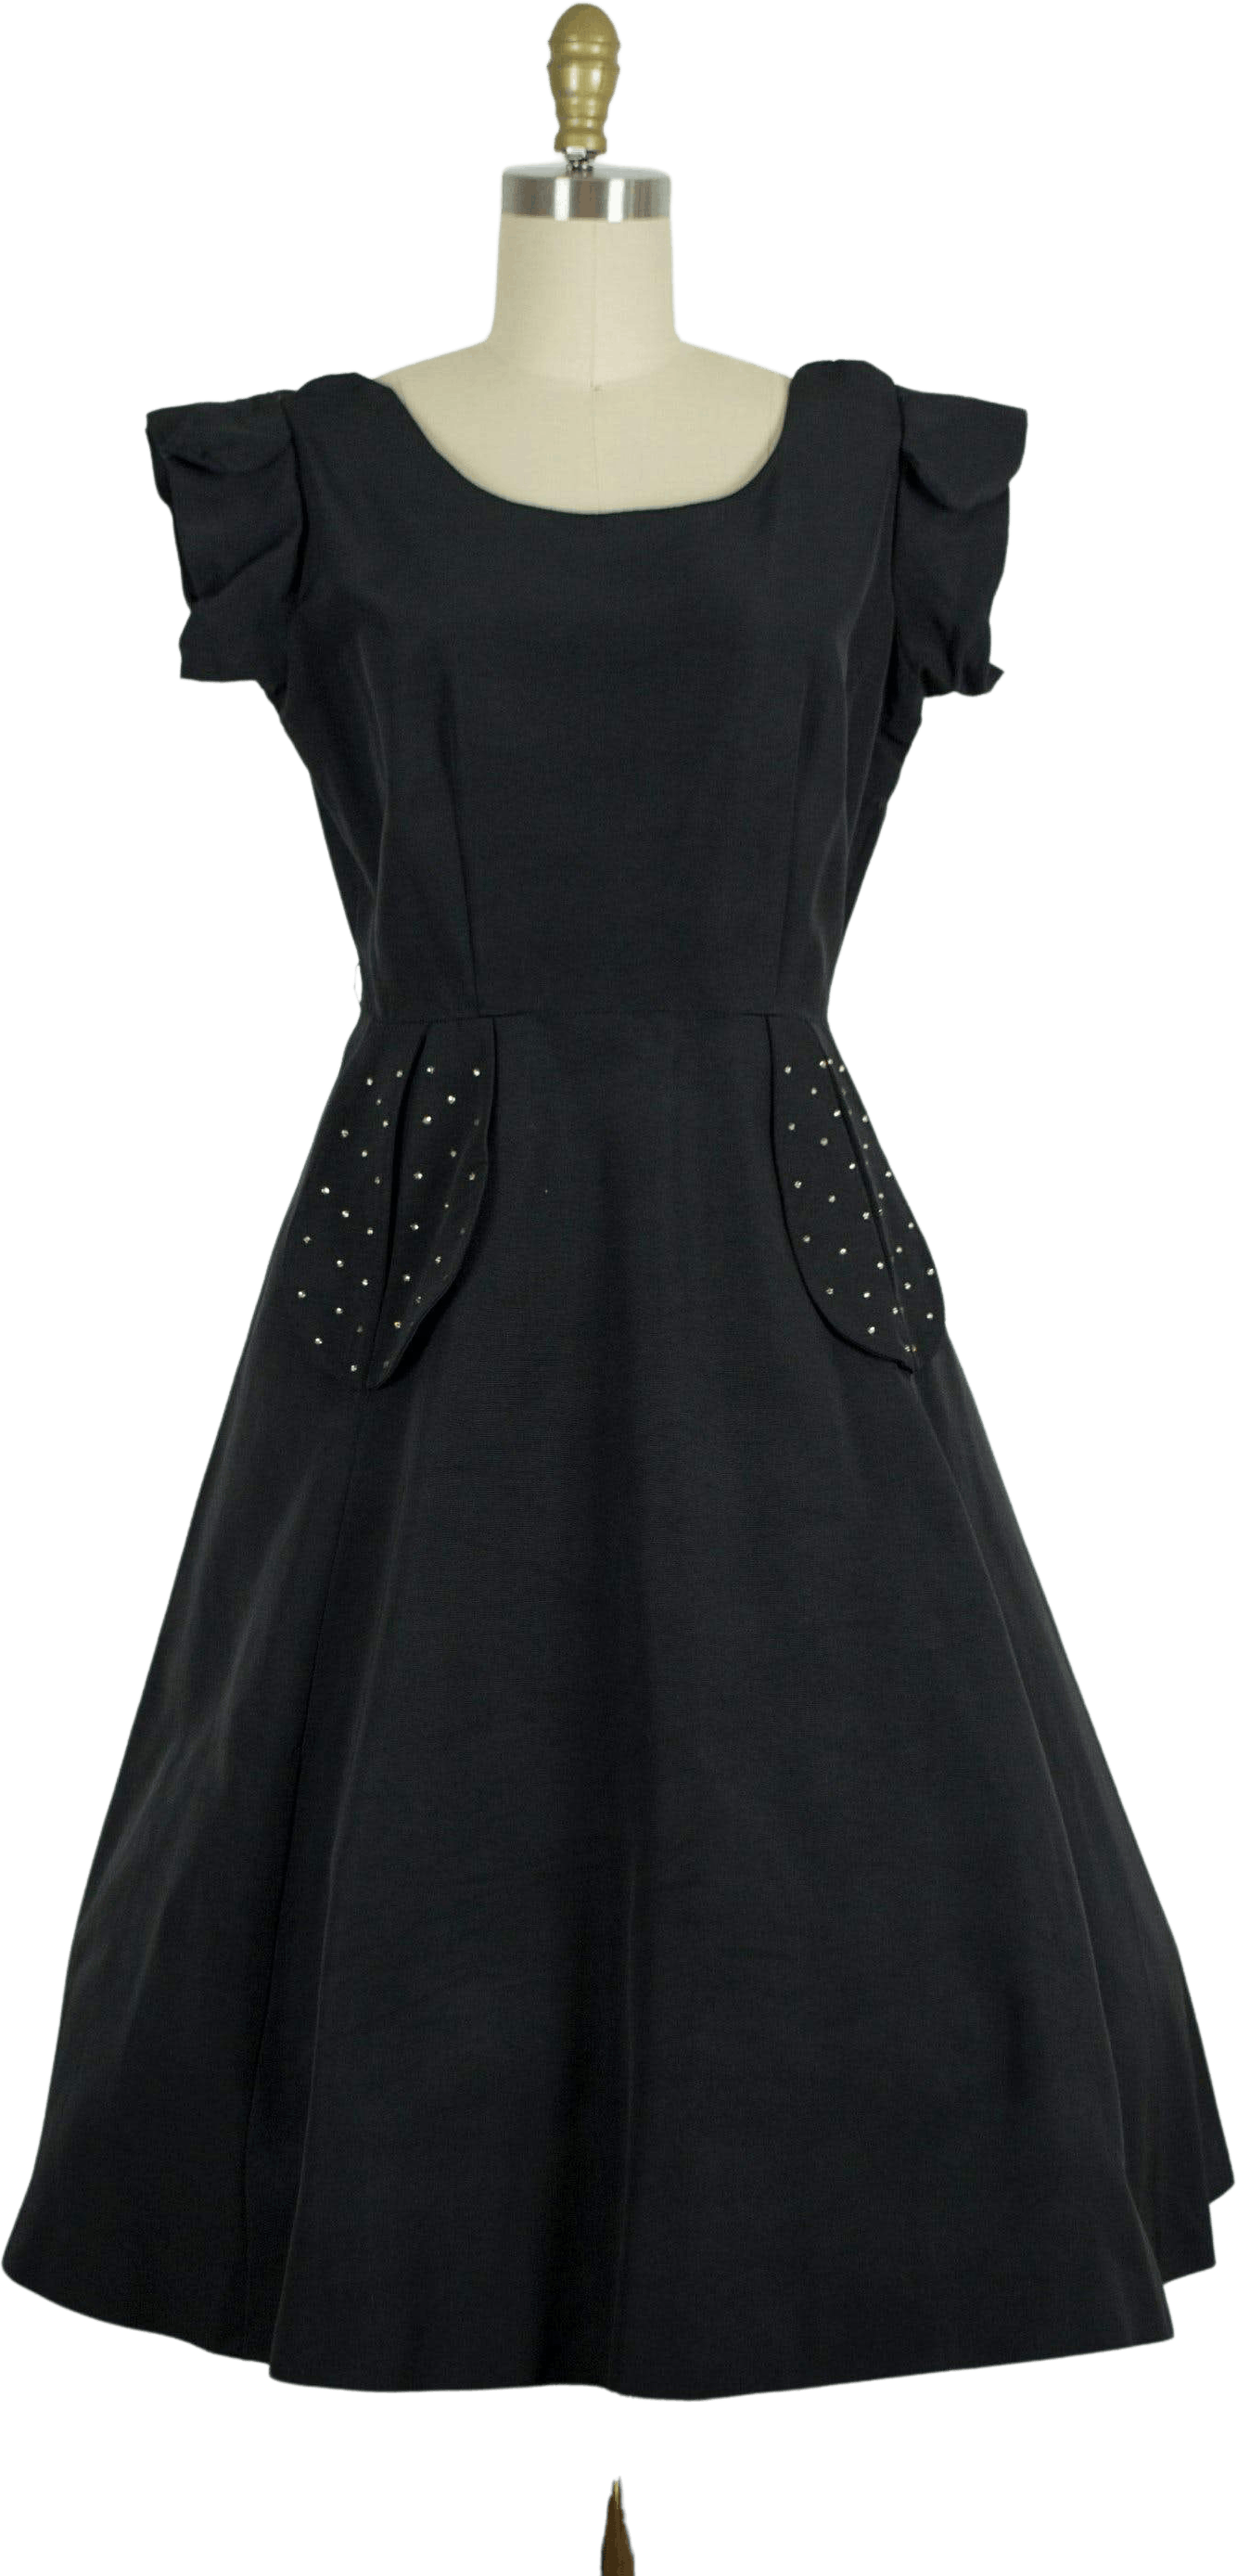 Vintage 50's Black Cocktail Dress with Rhinestone Pockets | Shop THRILLING